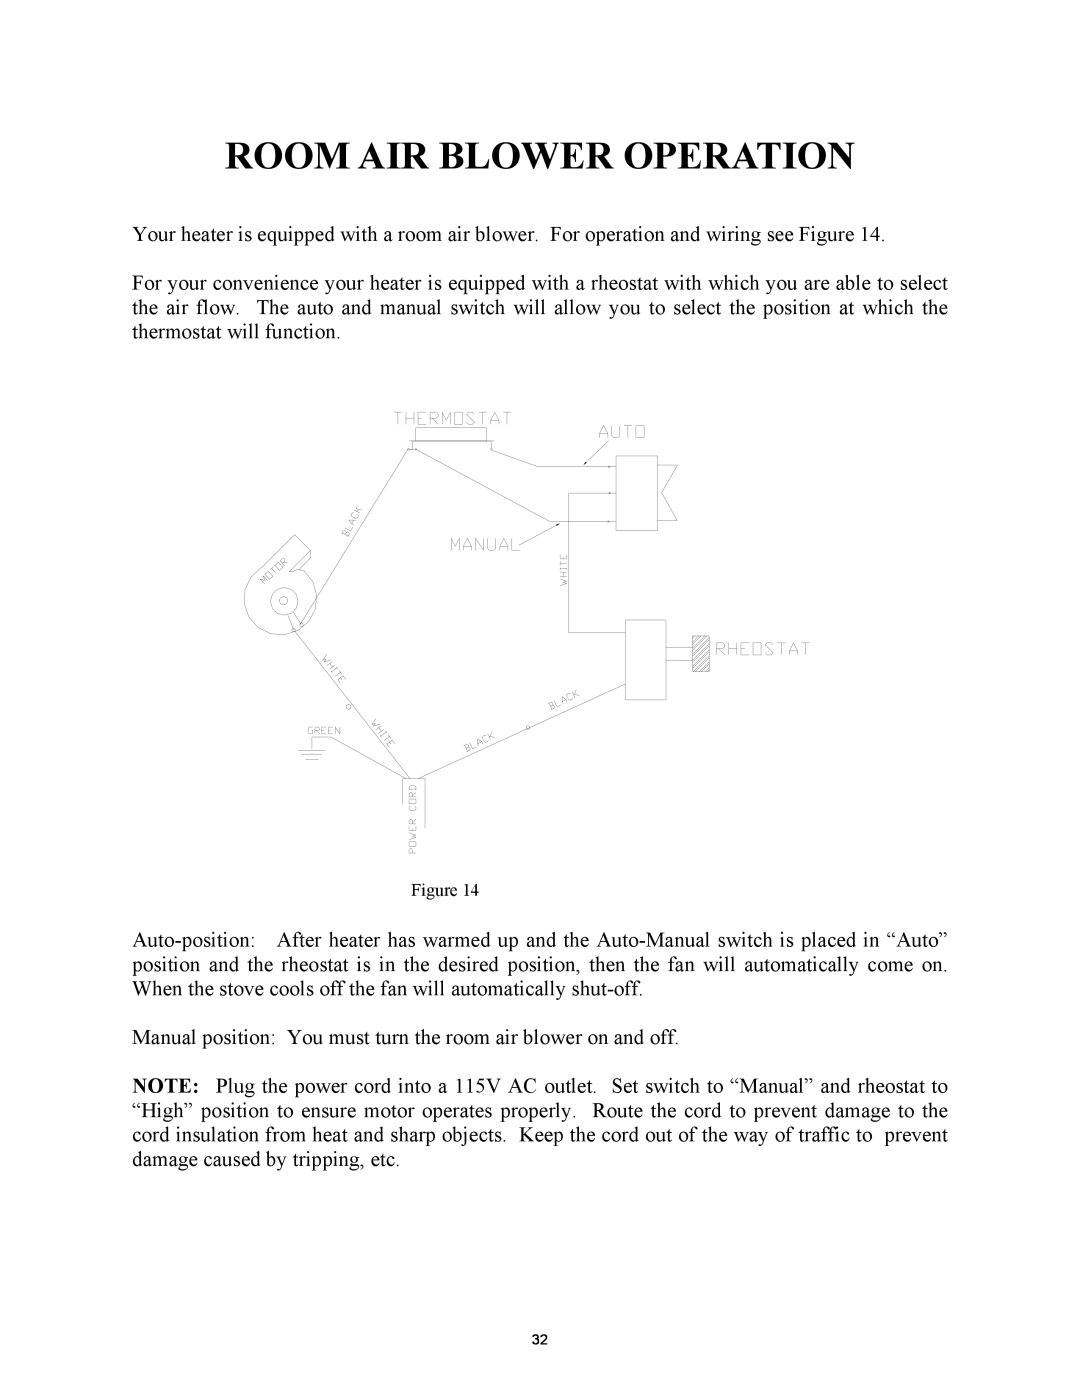 New Buck Corporation 81 installation instructions Room Air Blower Operation 